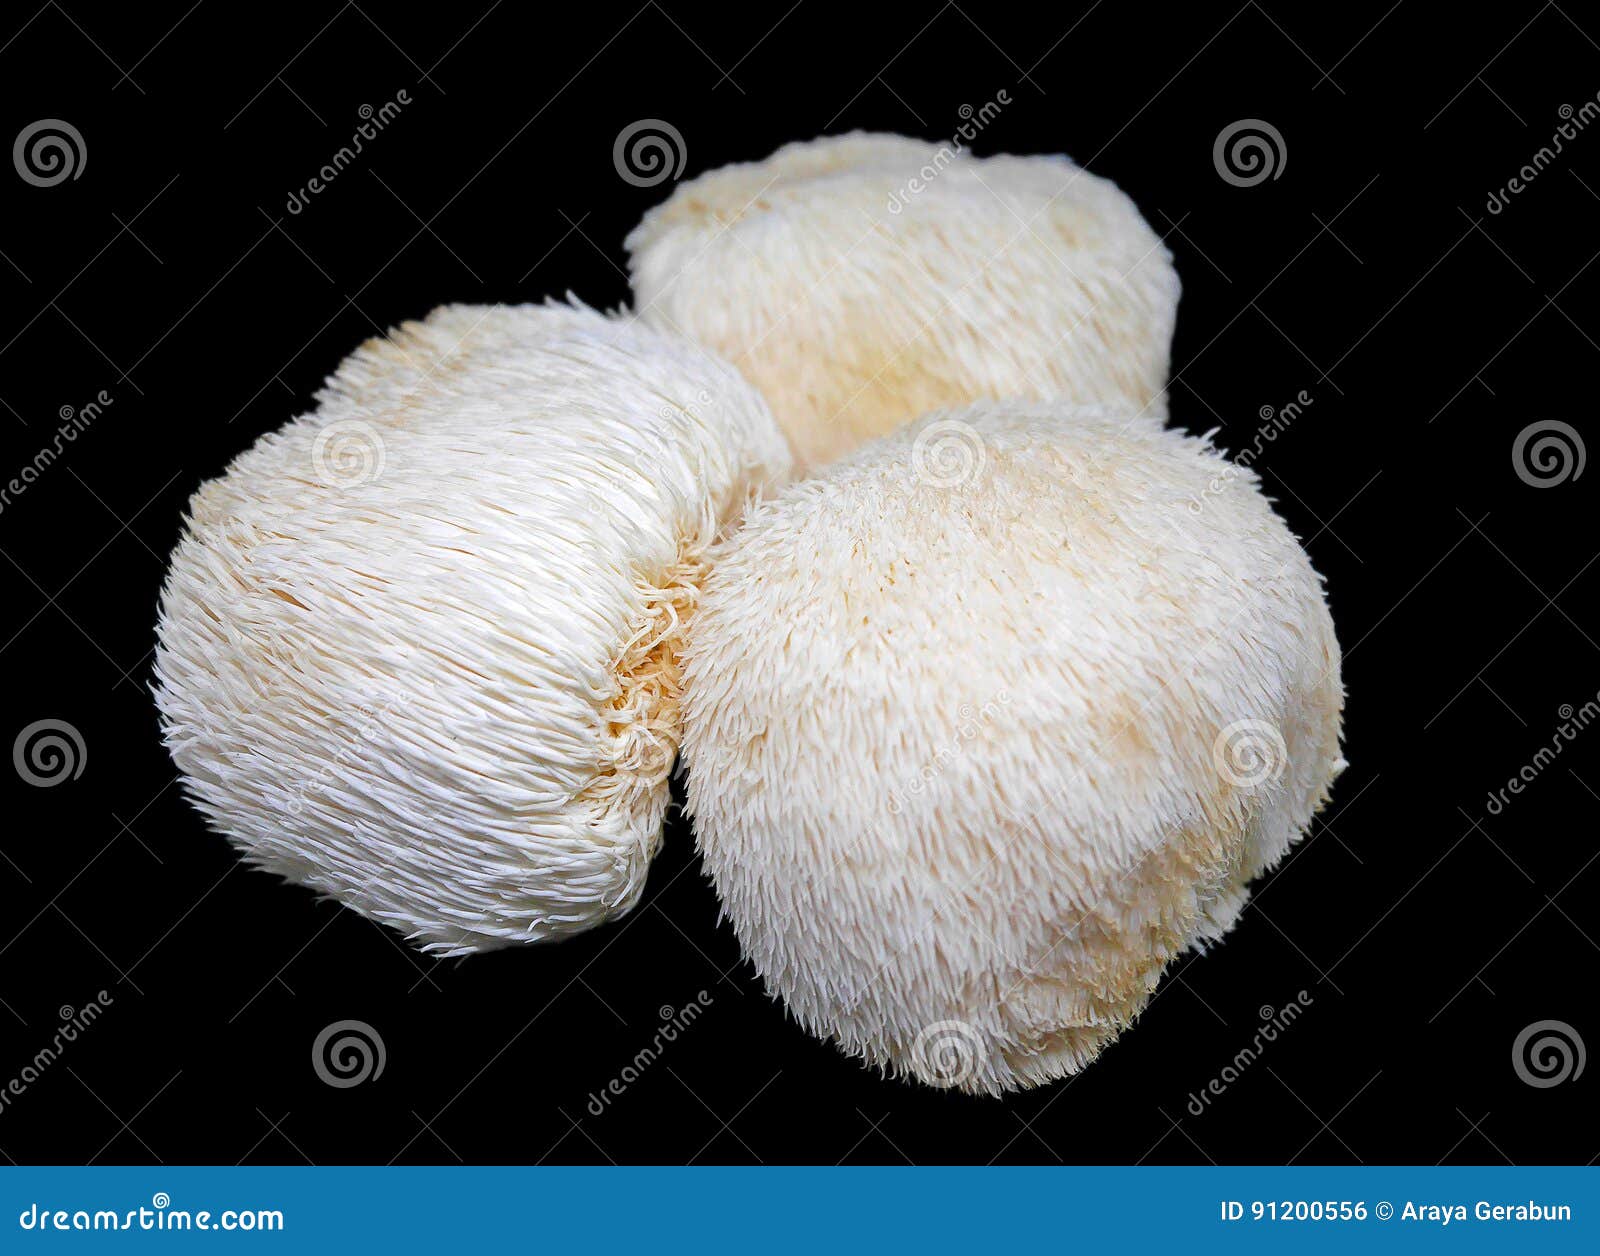 lion's mane mushroom on black background